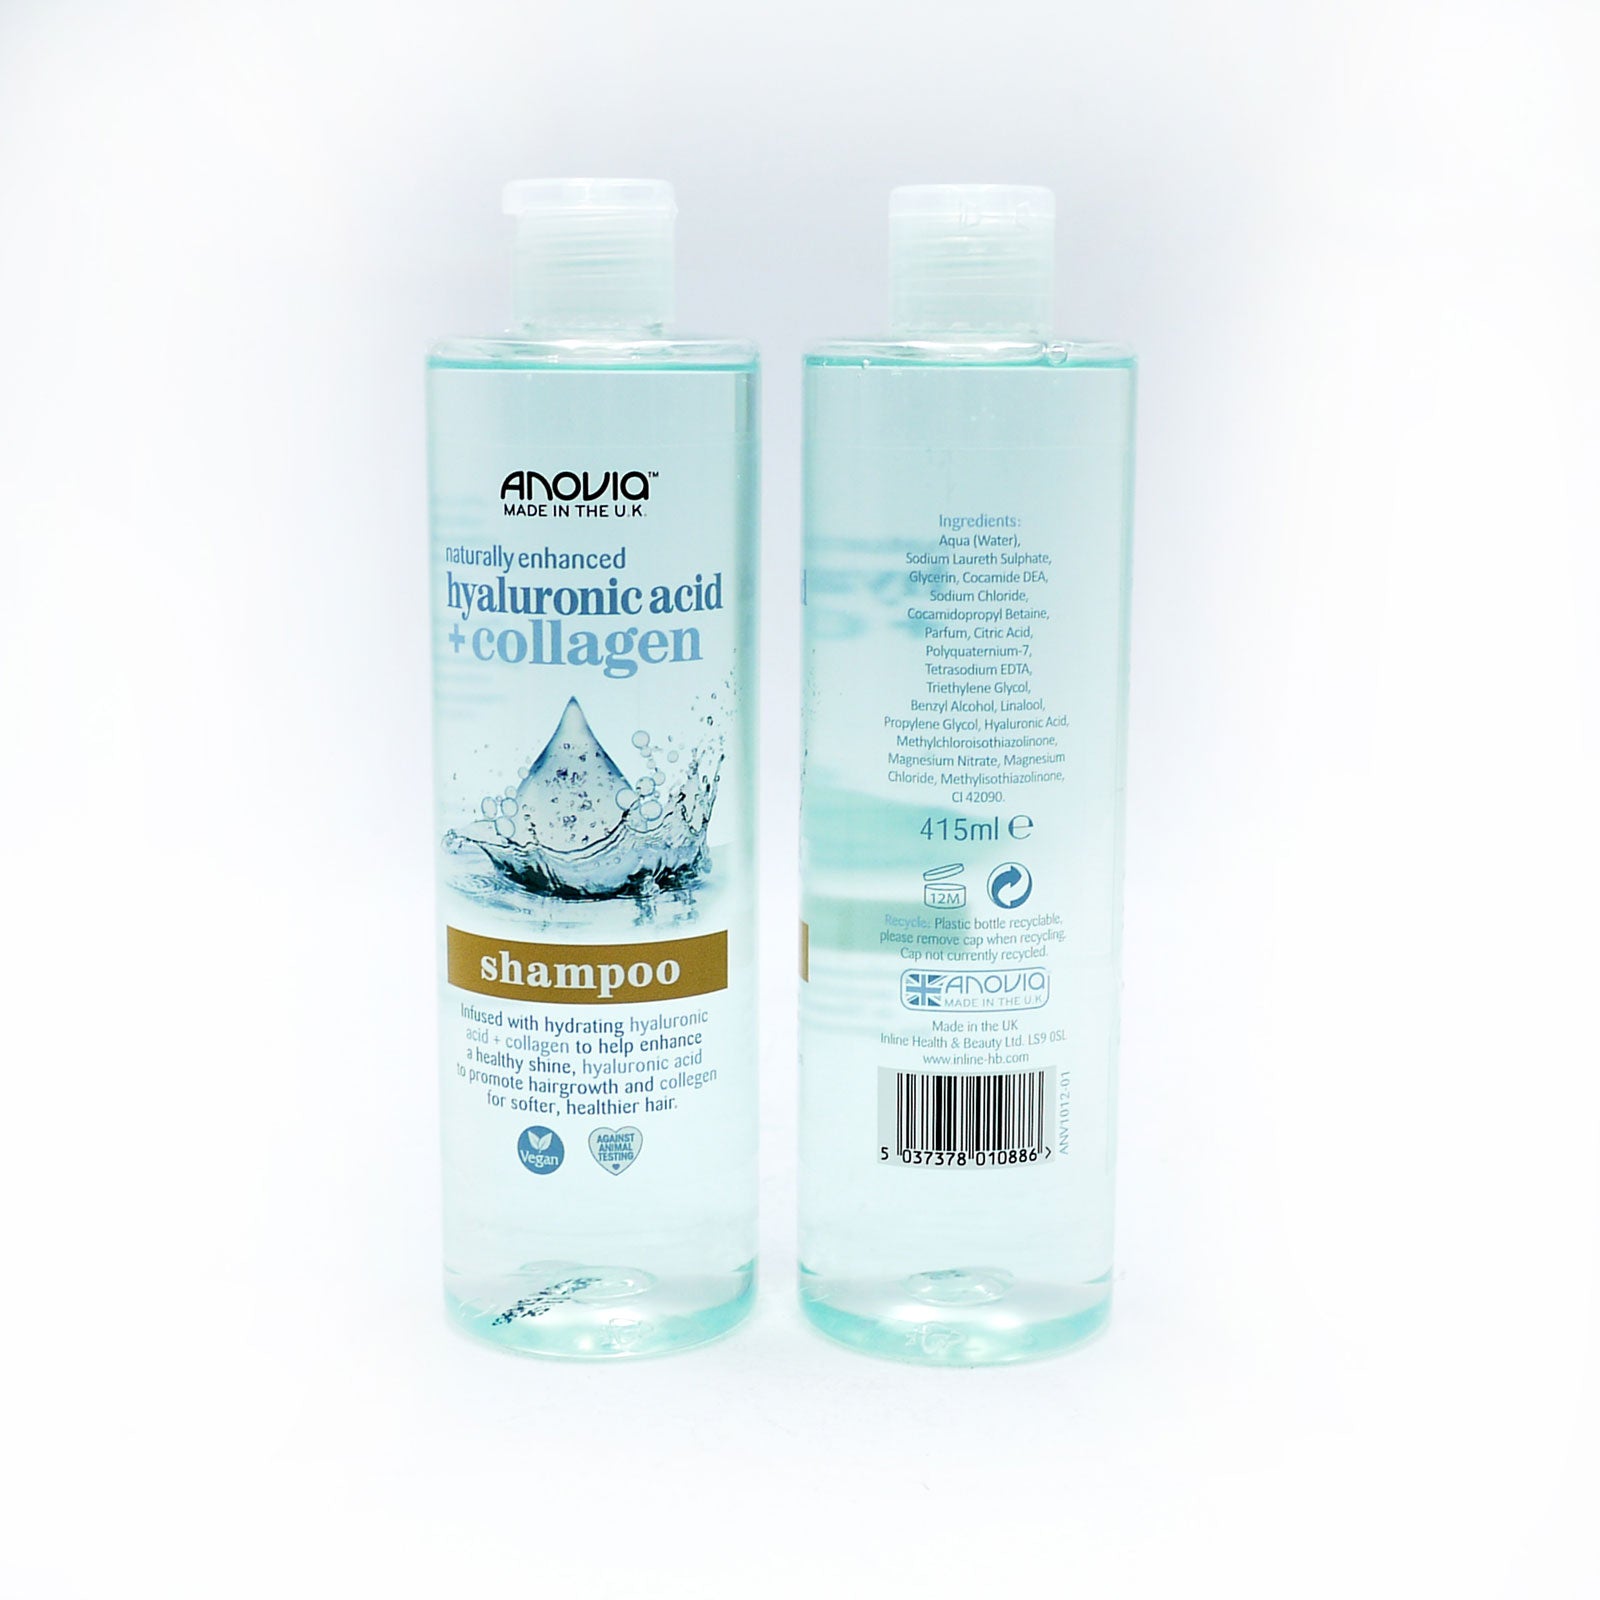 Anovia Shampoo Hyaluronic Acid & Collagen 41ML